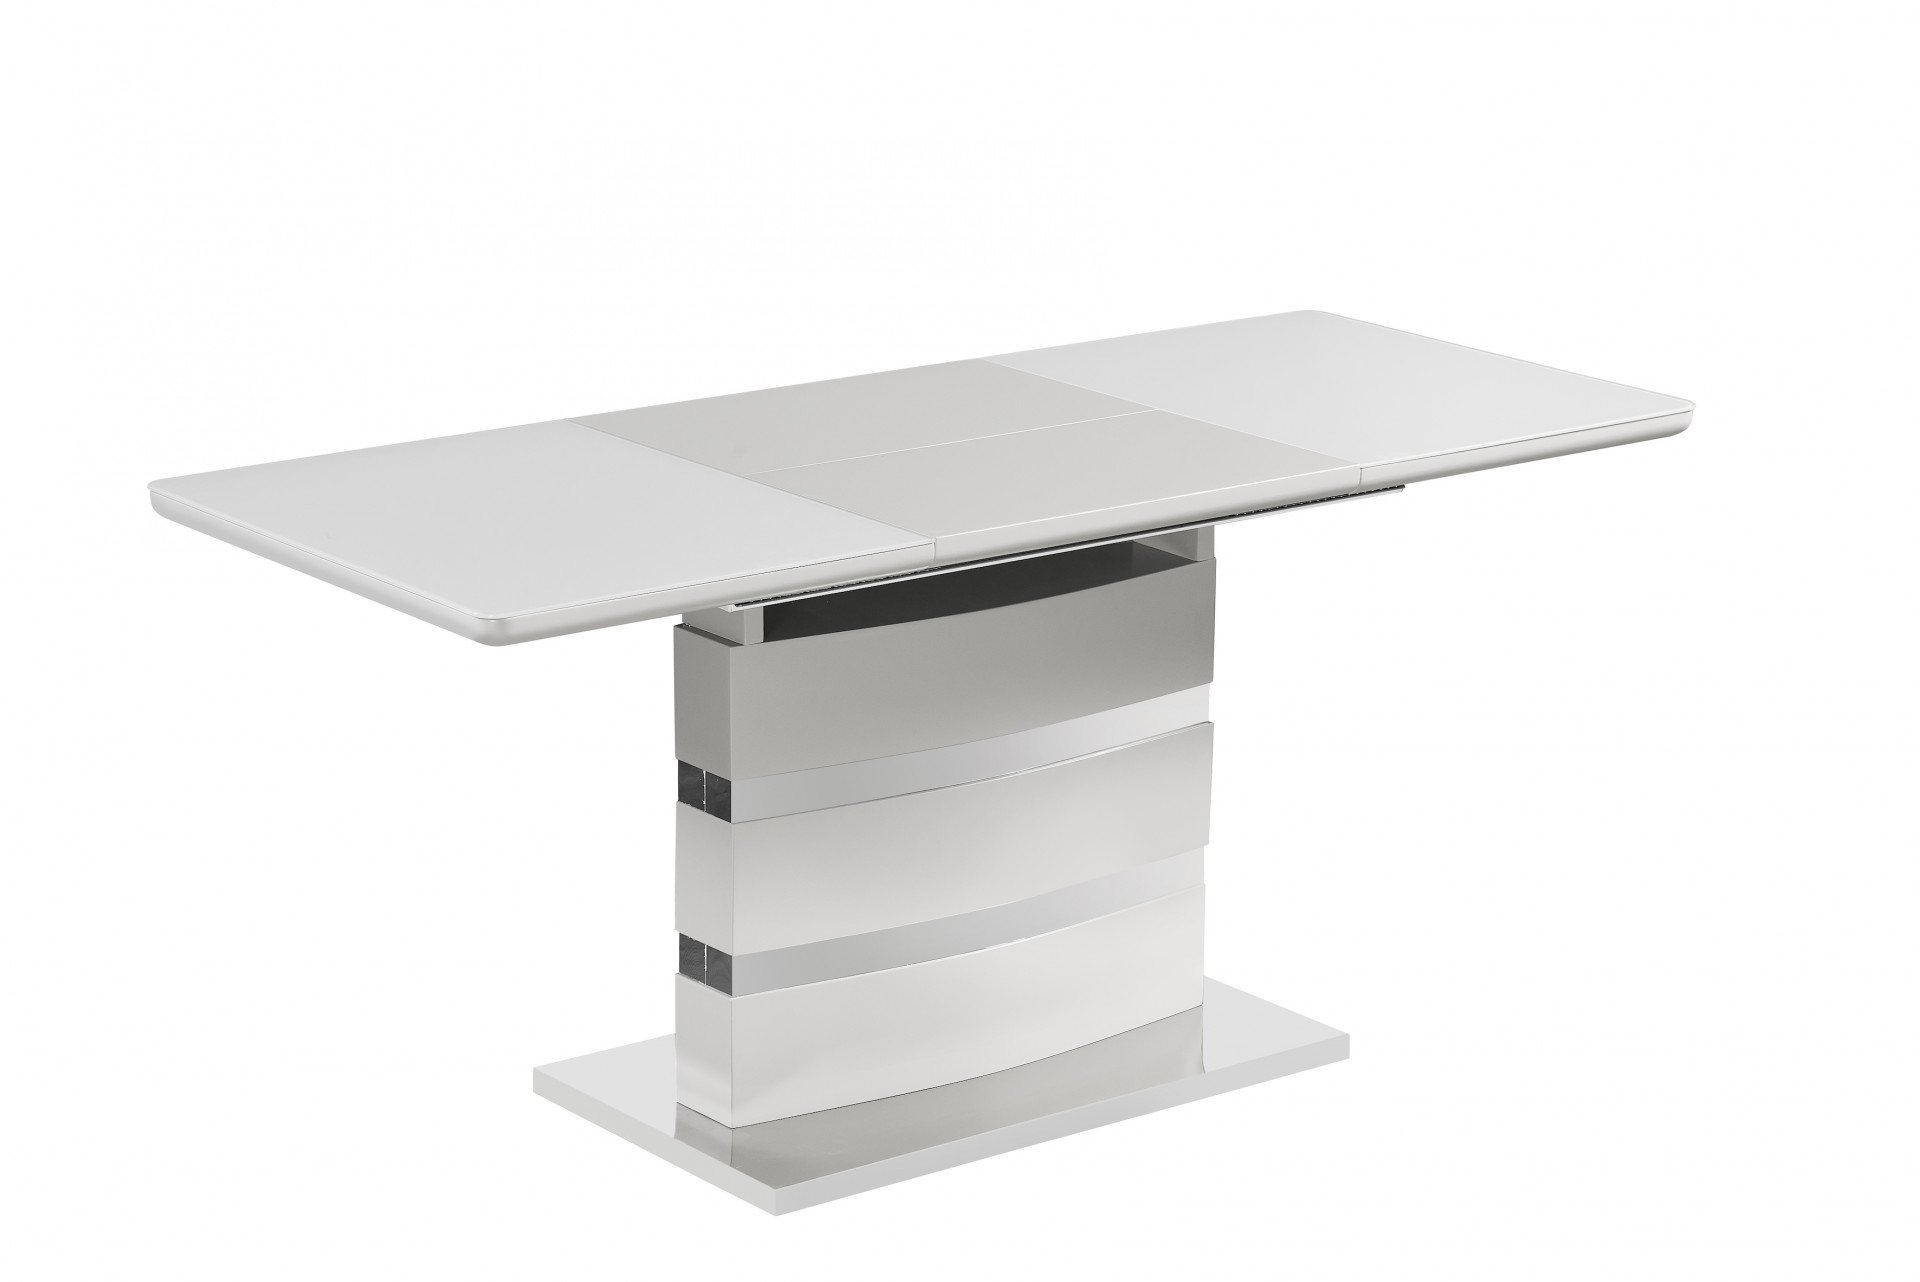 Стол обеденный IMP- Hammer (Хаммер) светло-серый 110/170 см